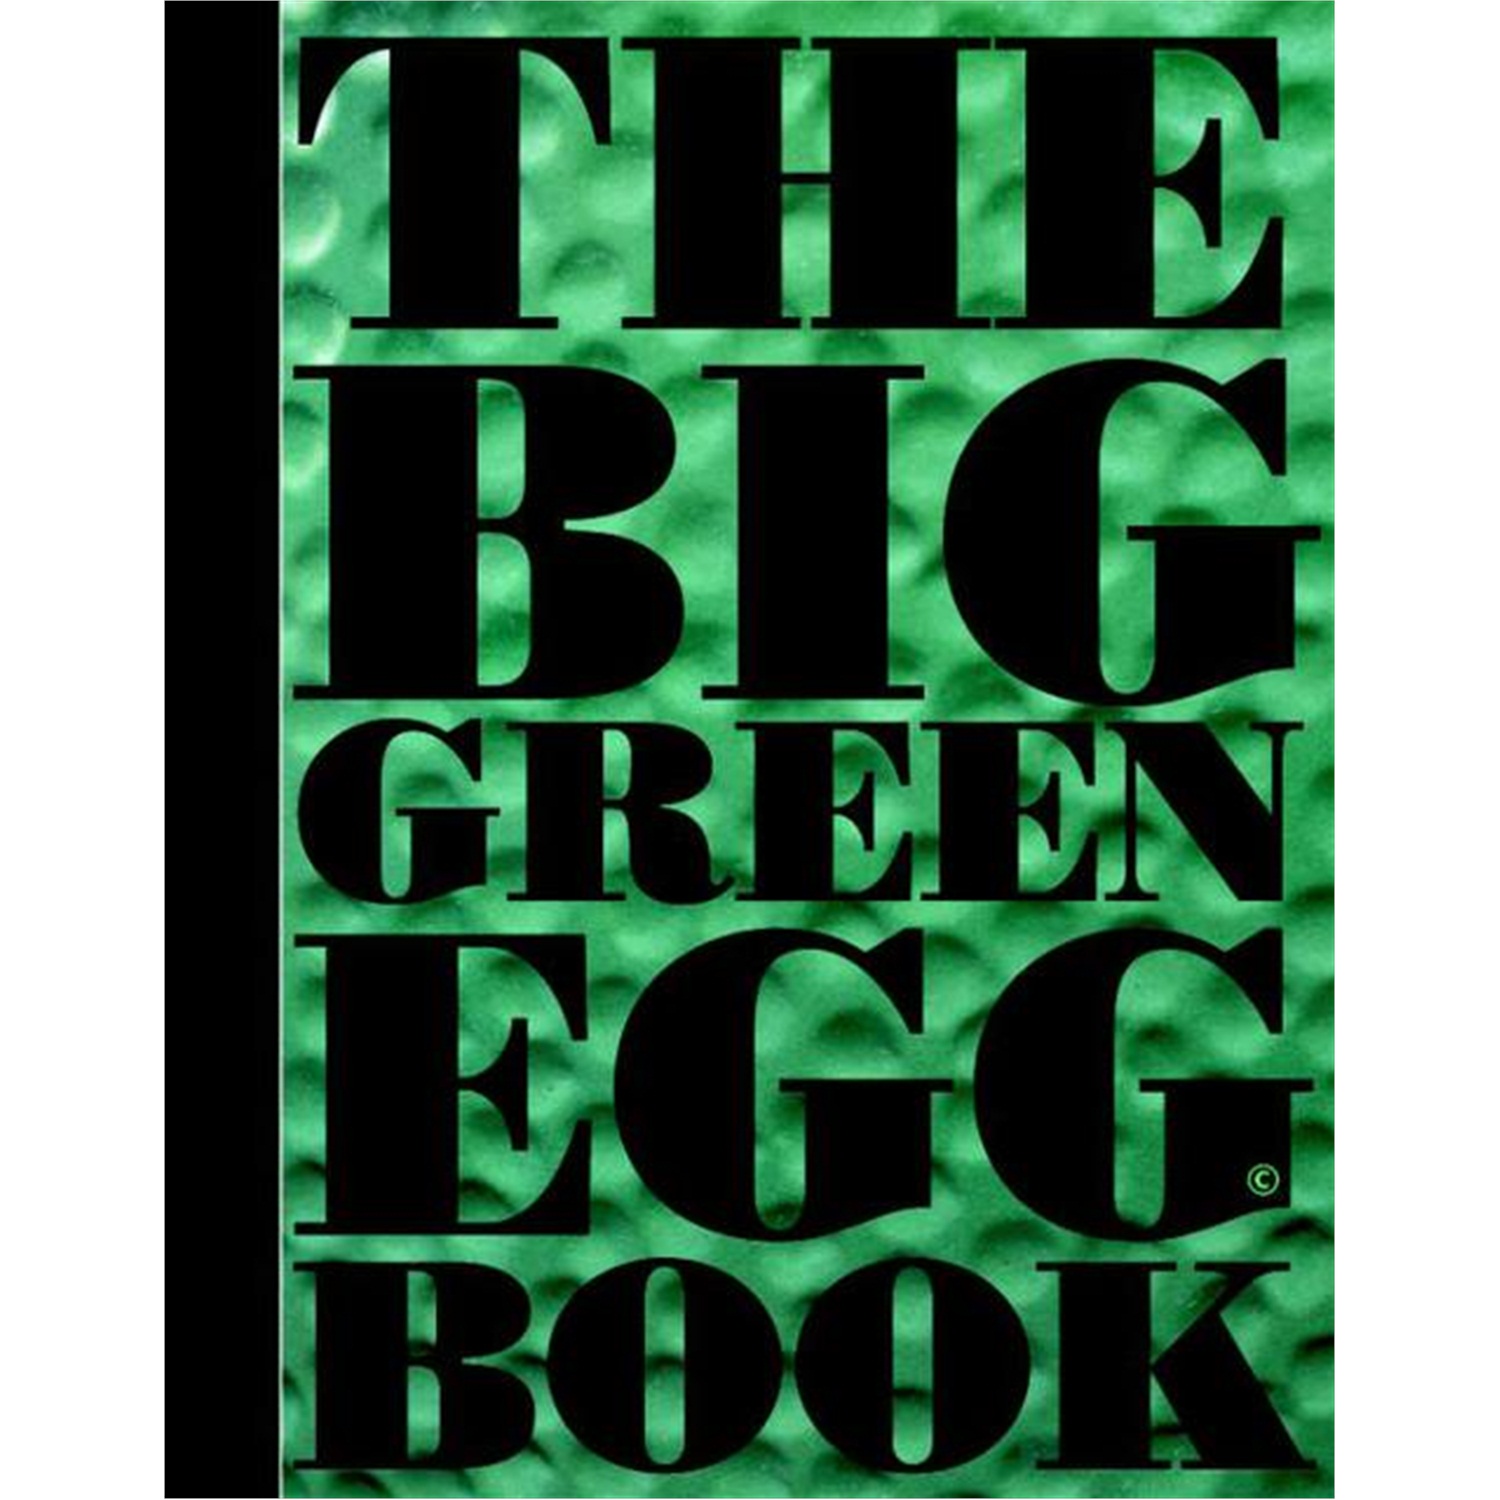 The big green egg book